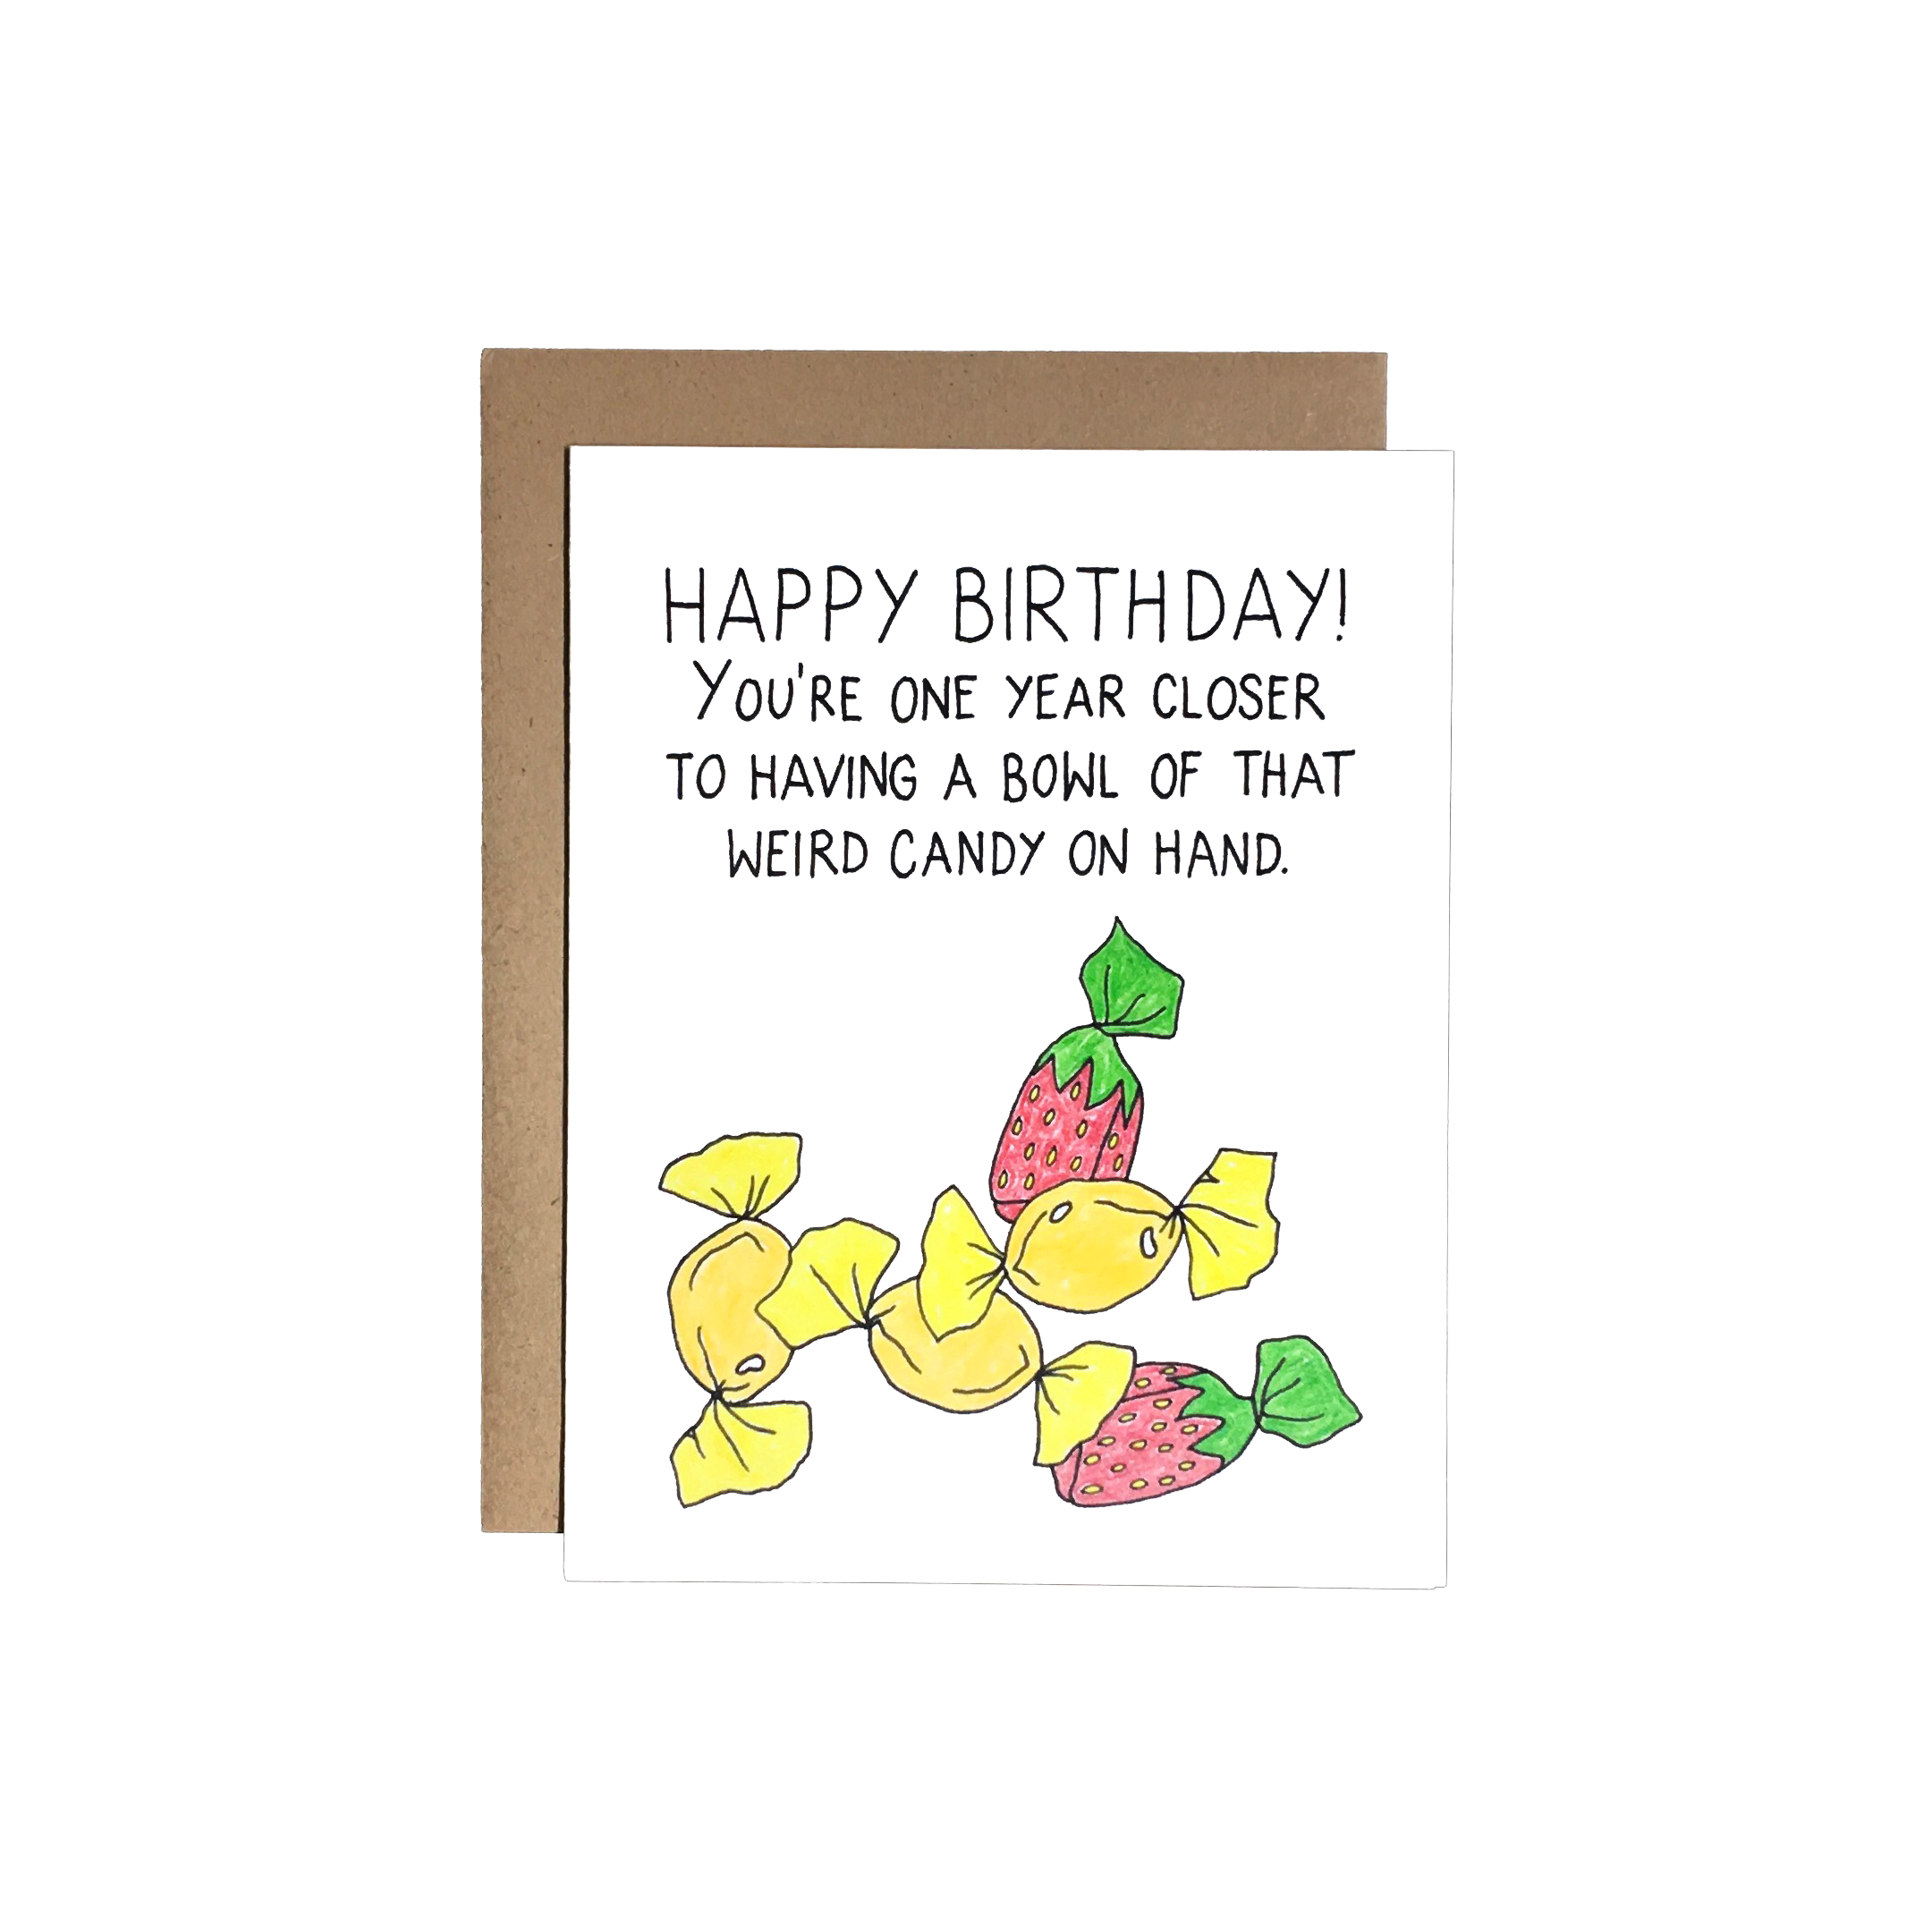 Birthday Weird Candy Card - DIGS